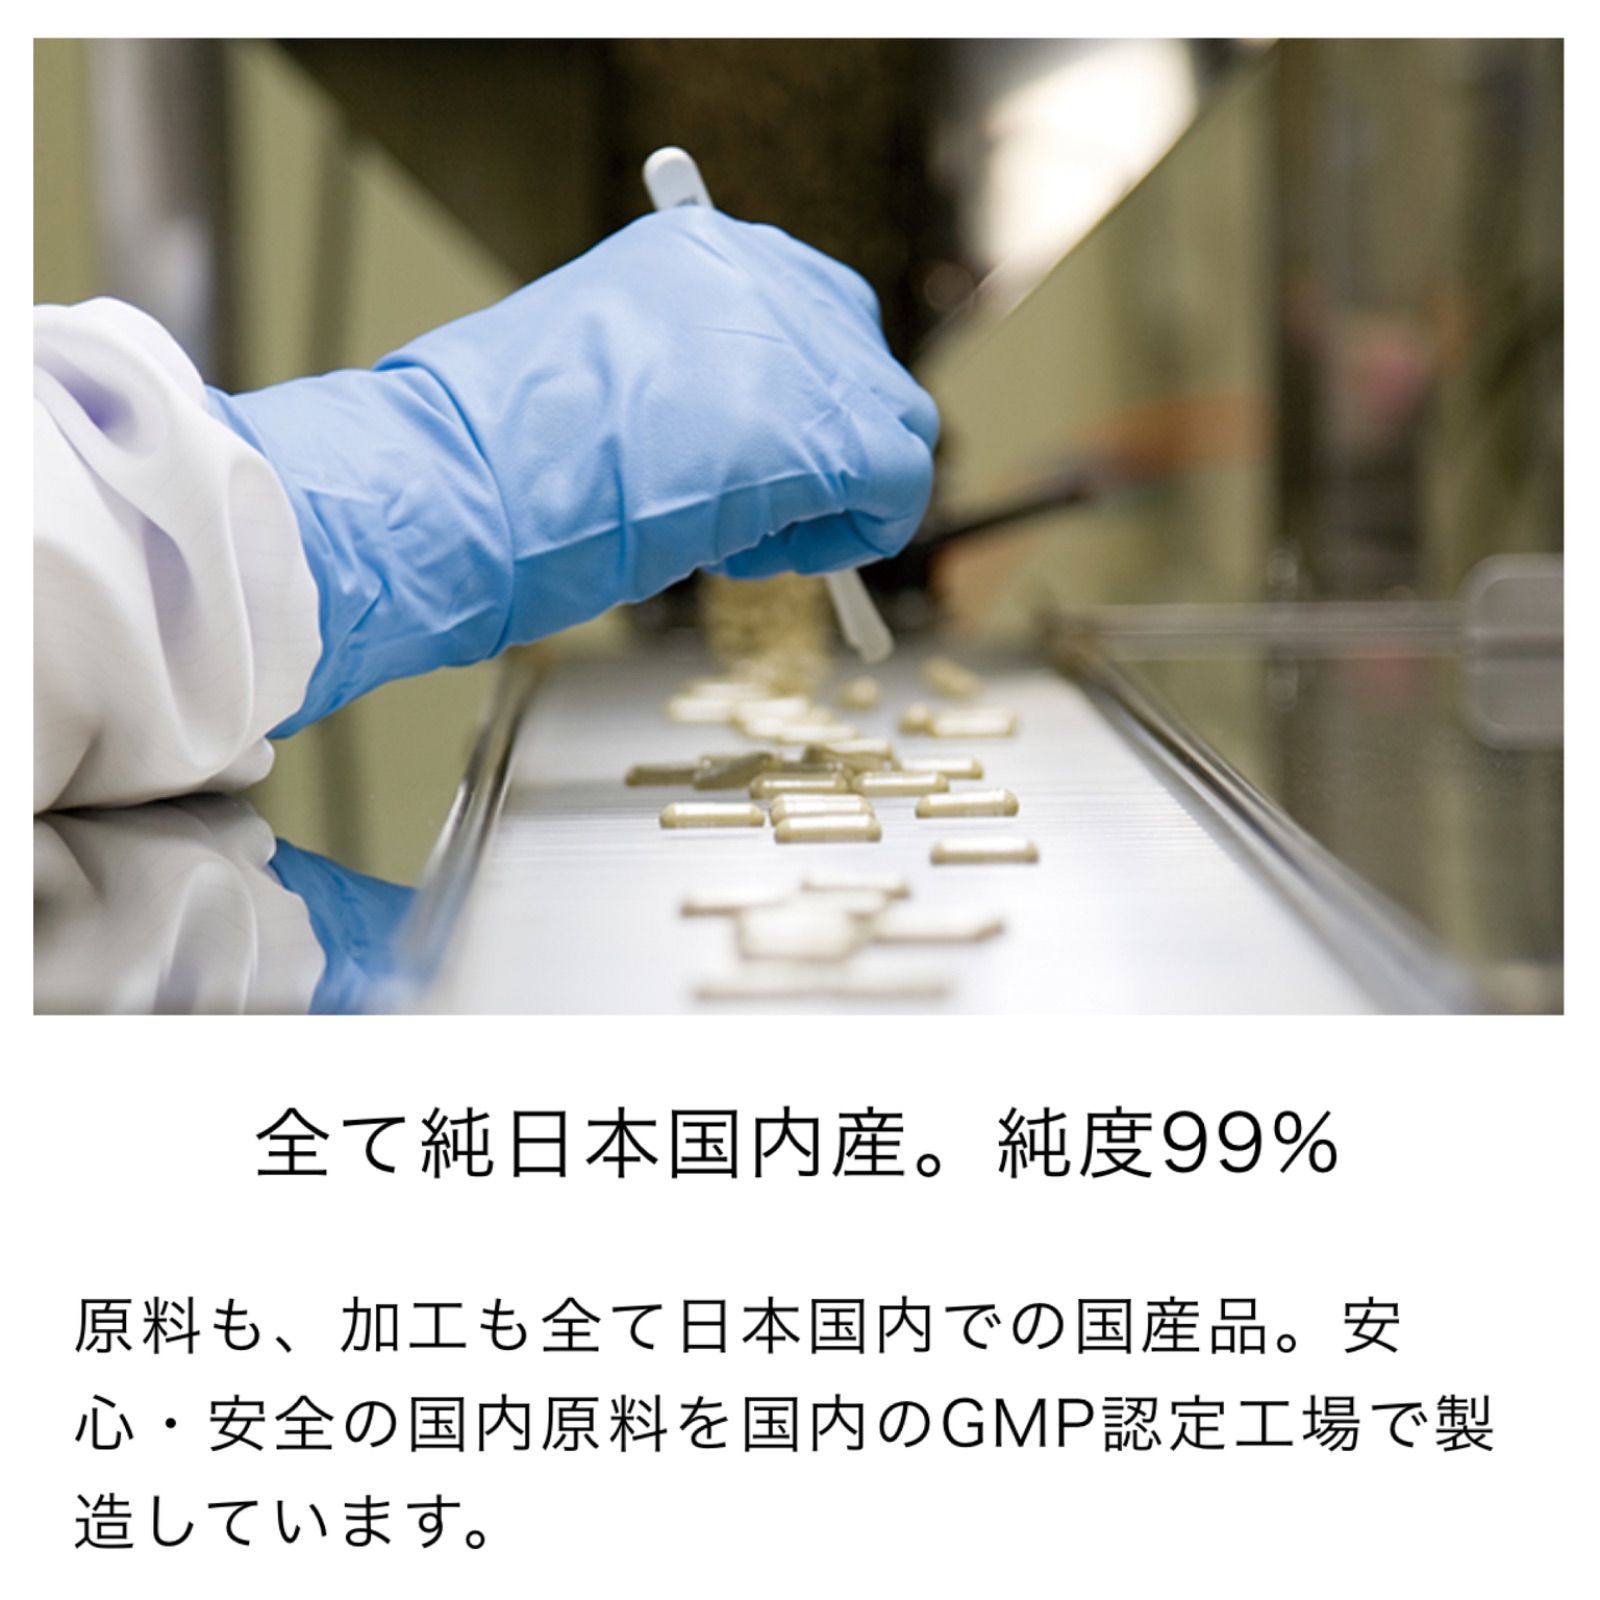 NMN【絢】サプリ NMN6,000mg 60カプセル 国内認定GNP工場生産 純度99